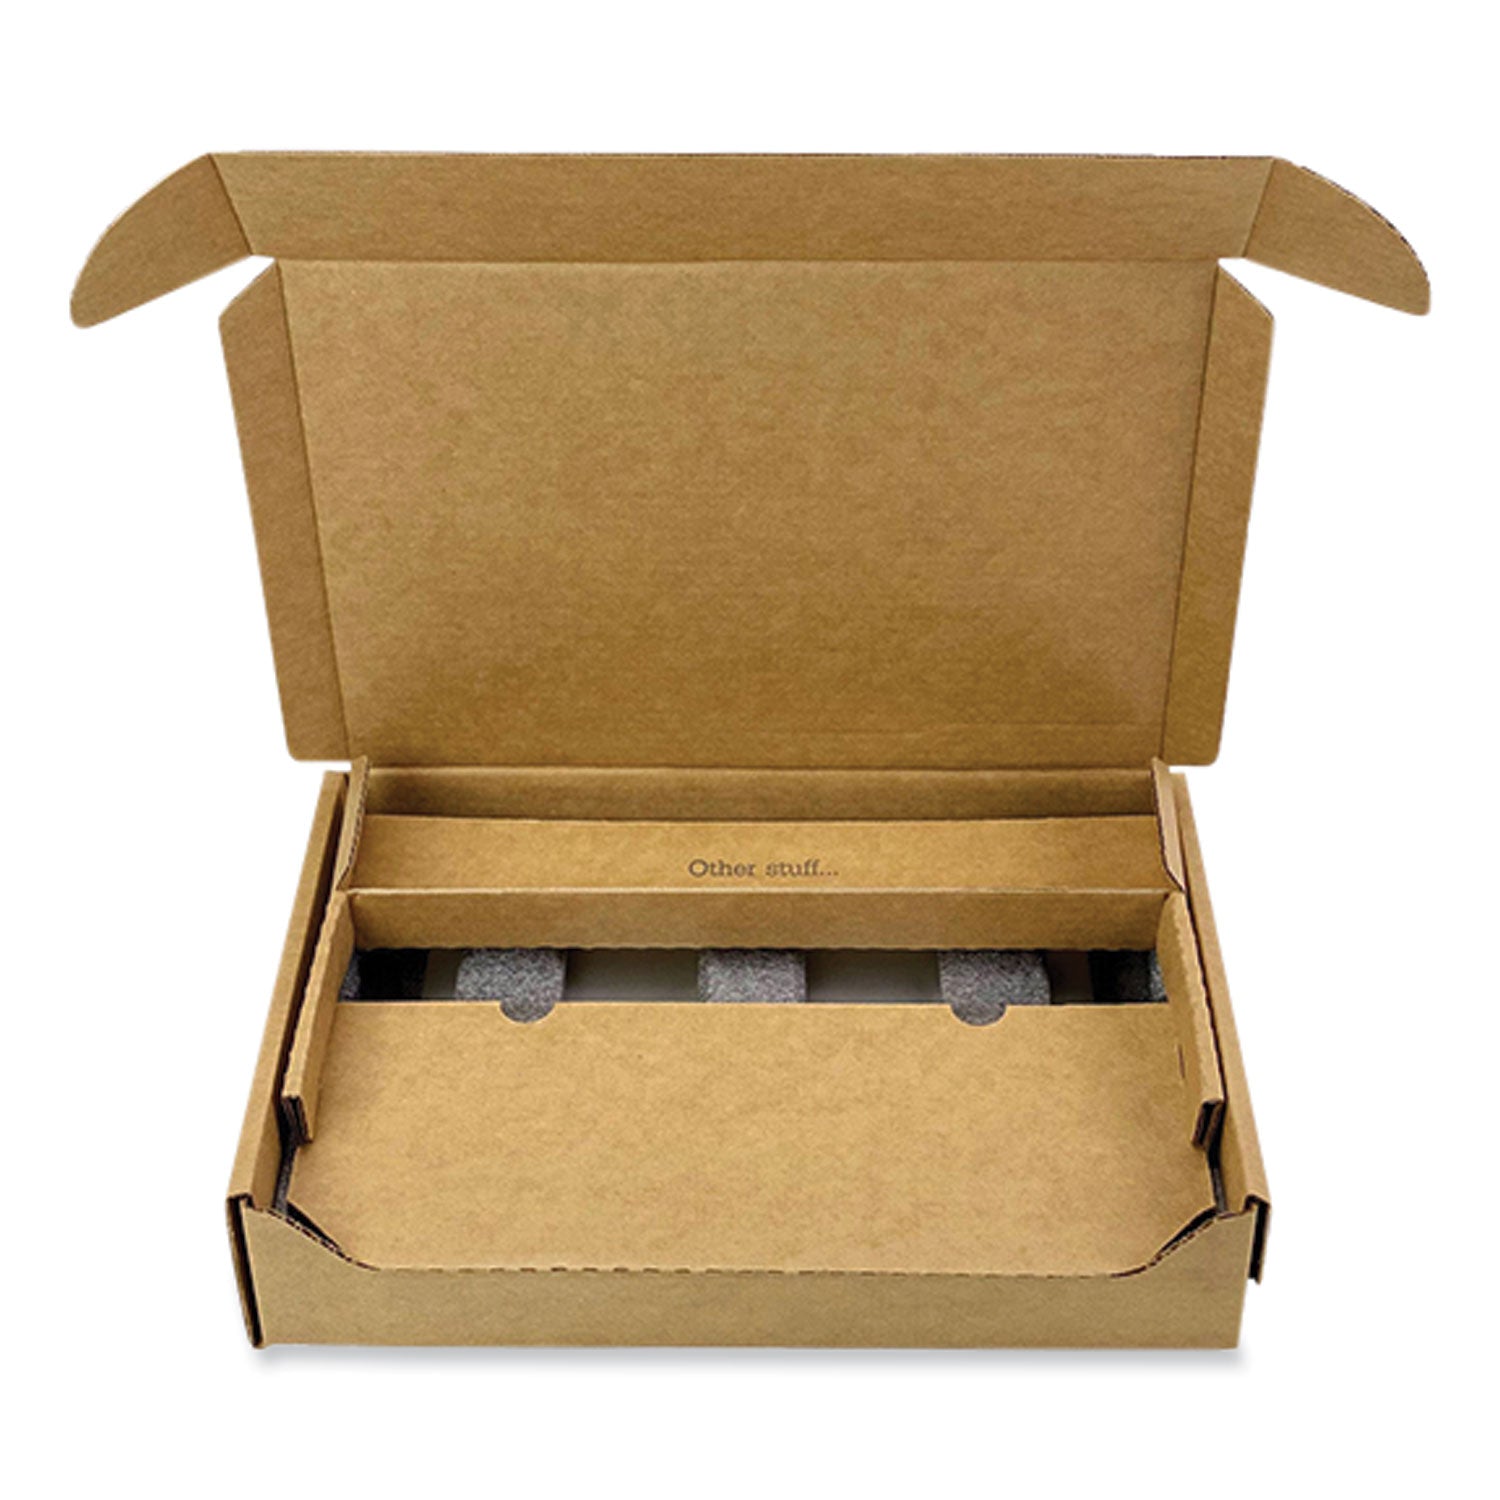 laptop-shipping-box-one-piece-foldover-opf-large-1725-x-1168-x-375-brown-kraft_epultcs00401 - 5